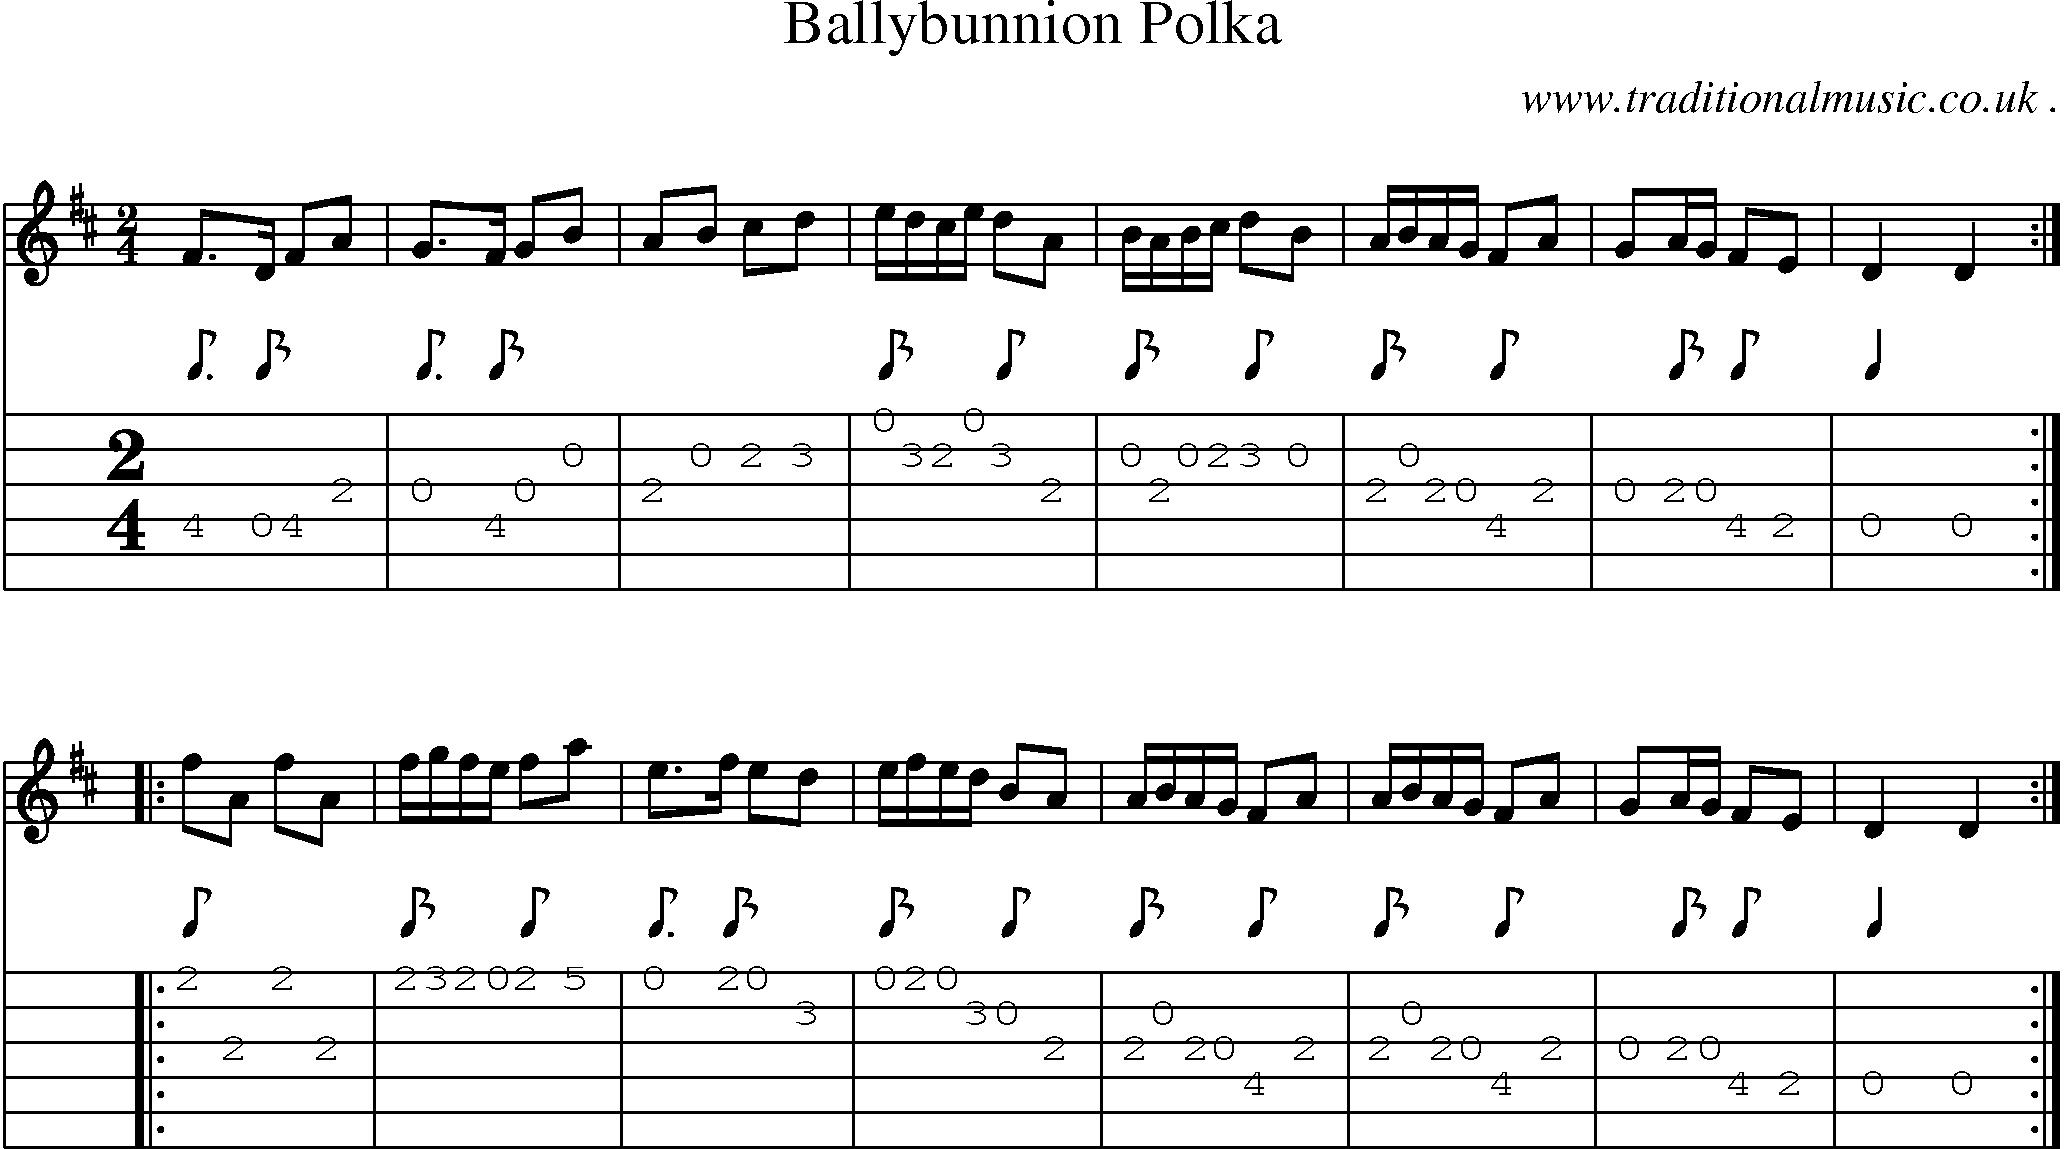 Sheet-Music and Guitar Tabs for Ballybunnion Polka